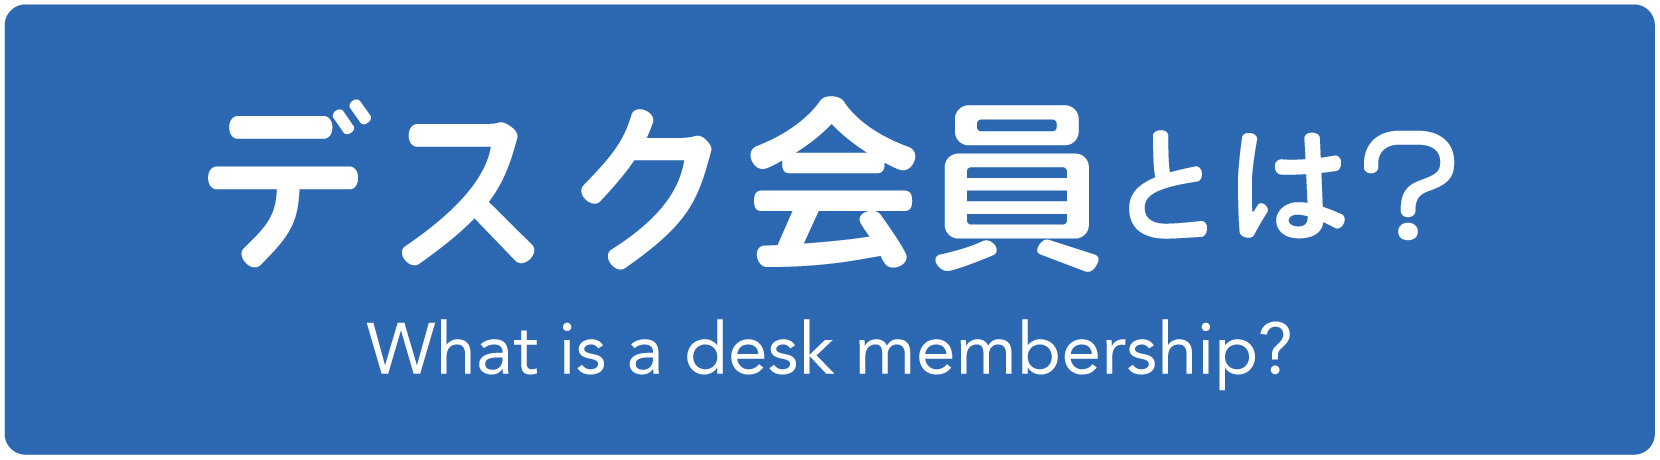 what-is-a-desk-membership_eye-blue